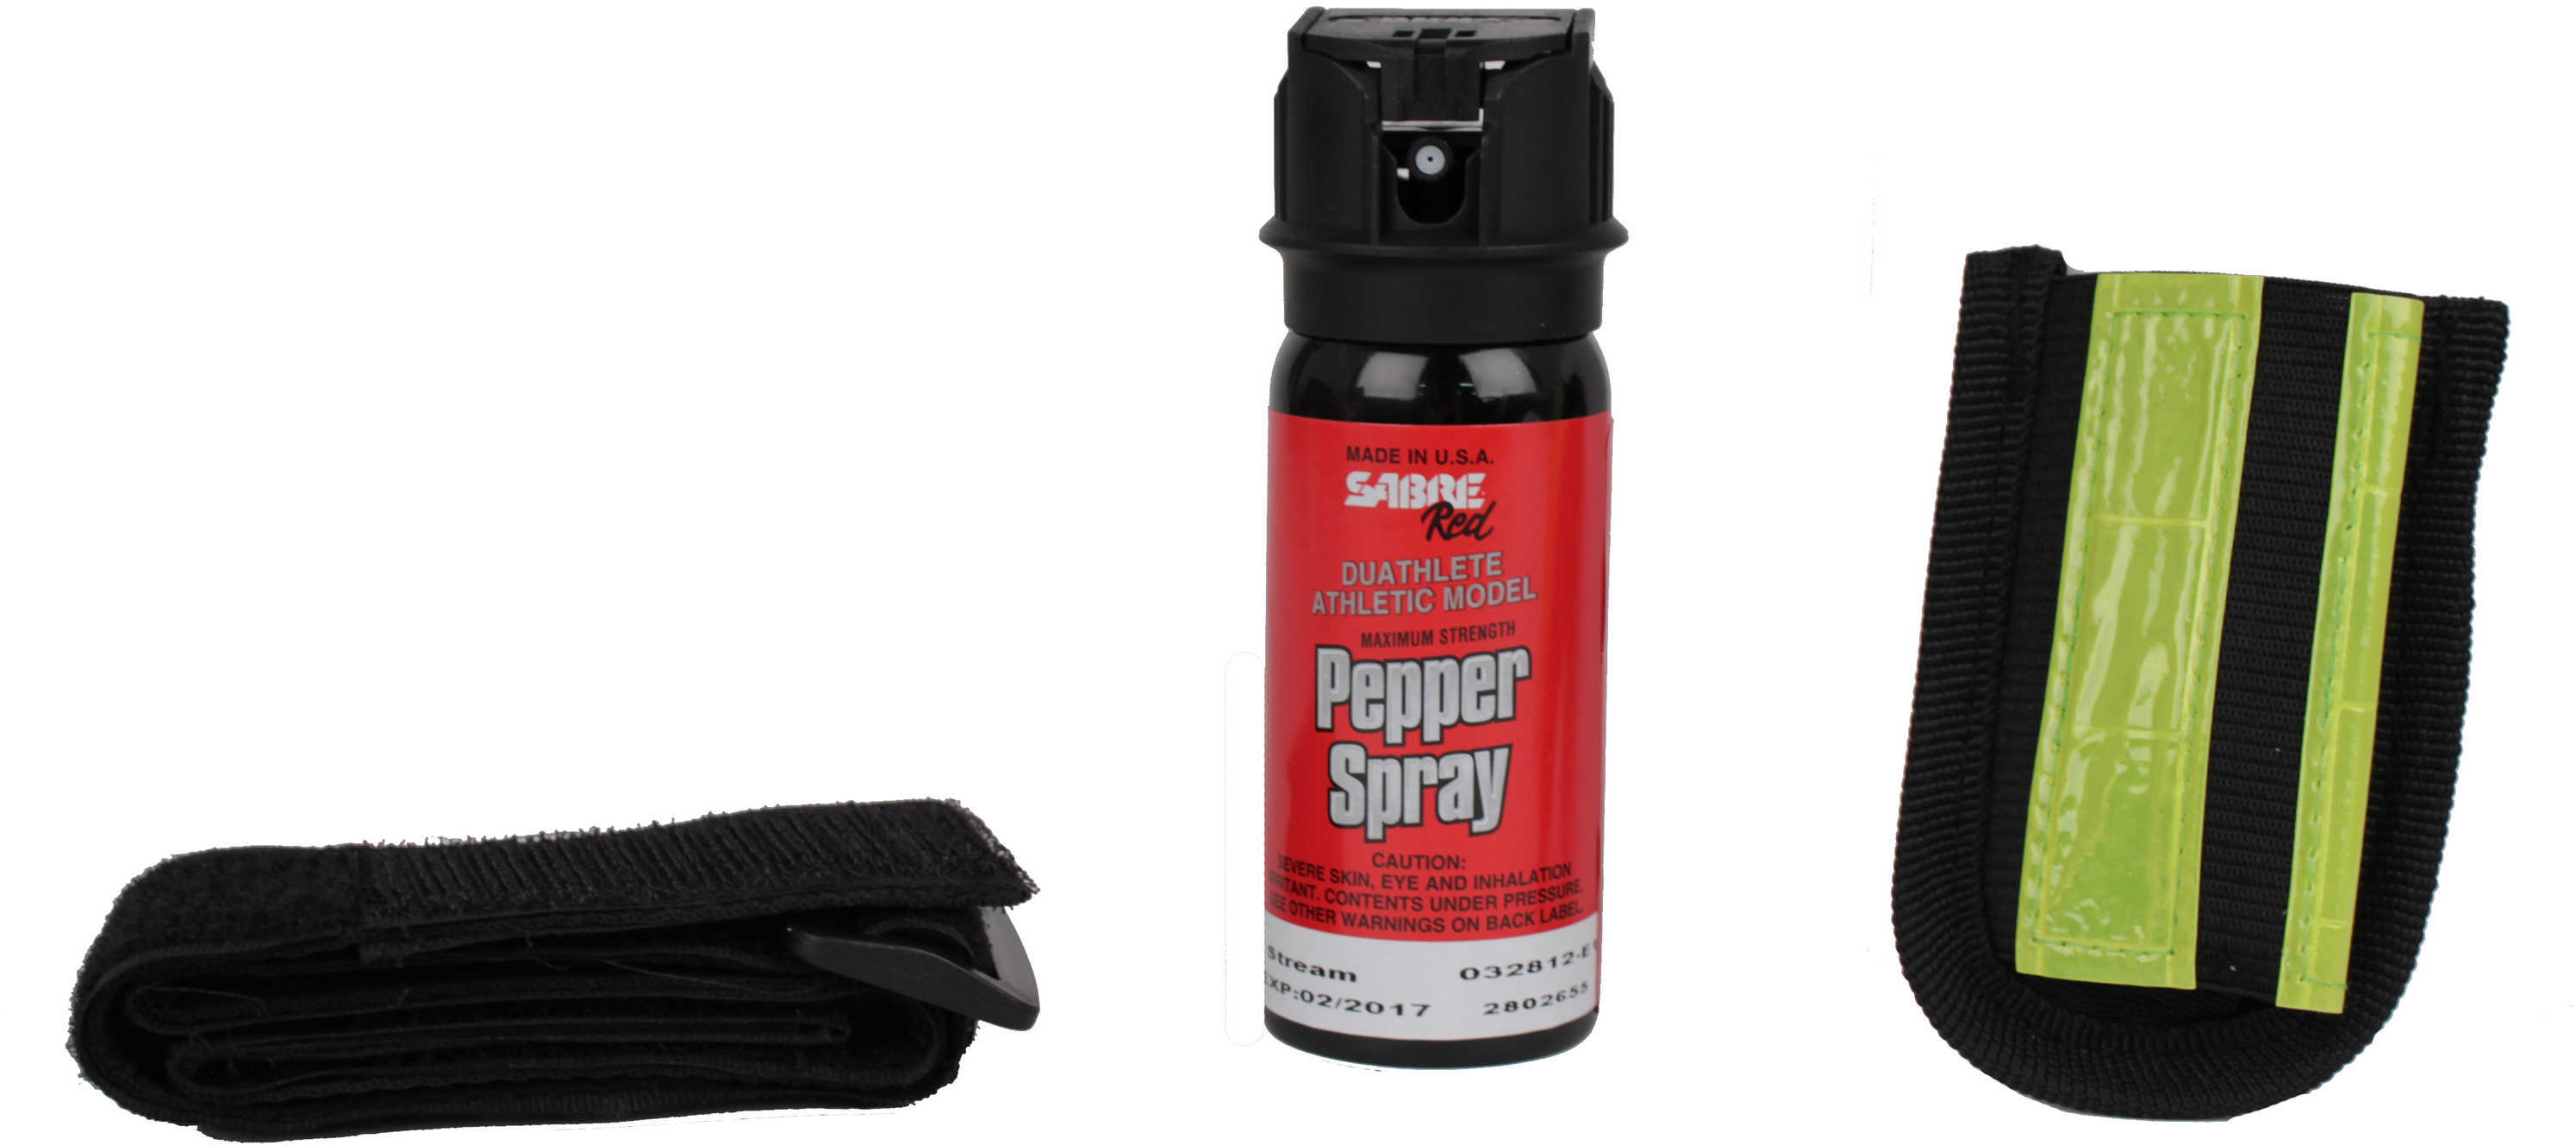 Sabre Pepper Spray 1.8Oz Arm Band